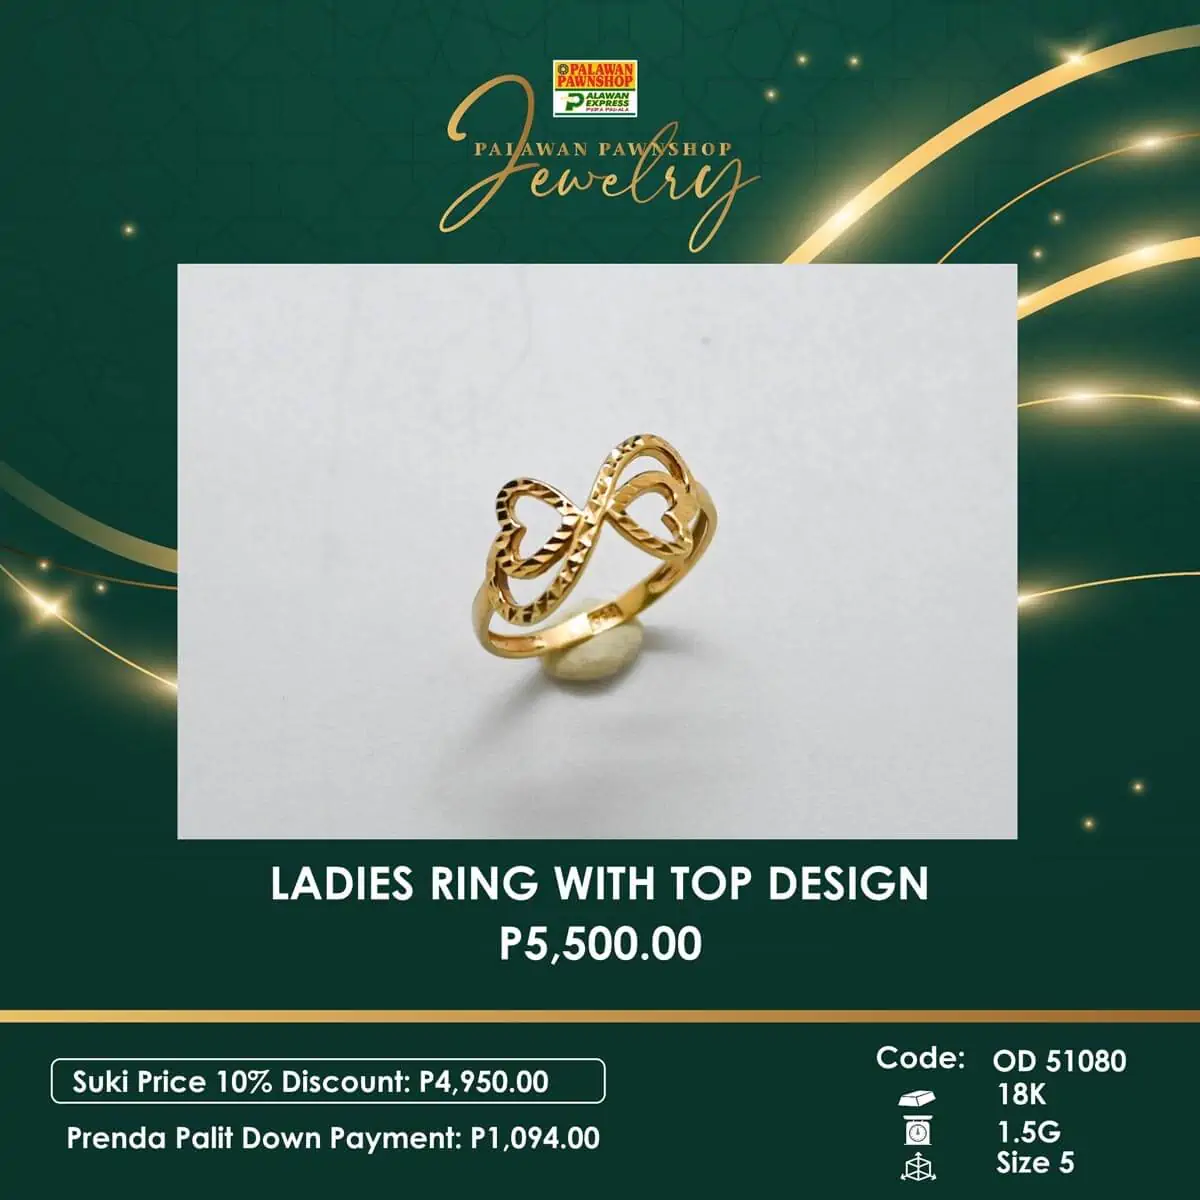 palawan pawnshop jewelry ring